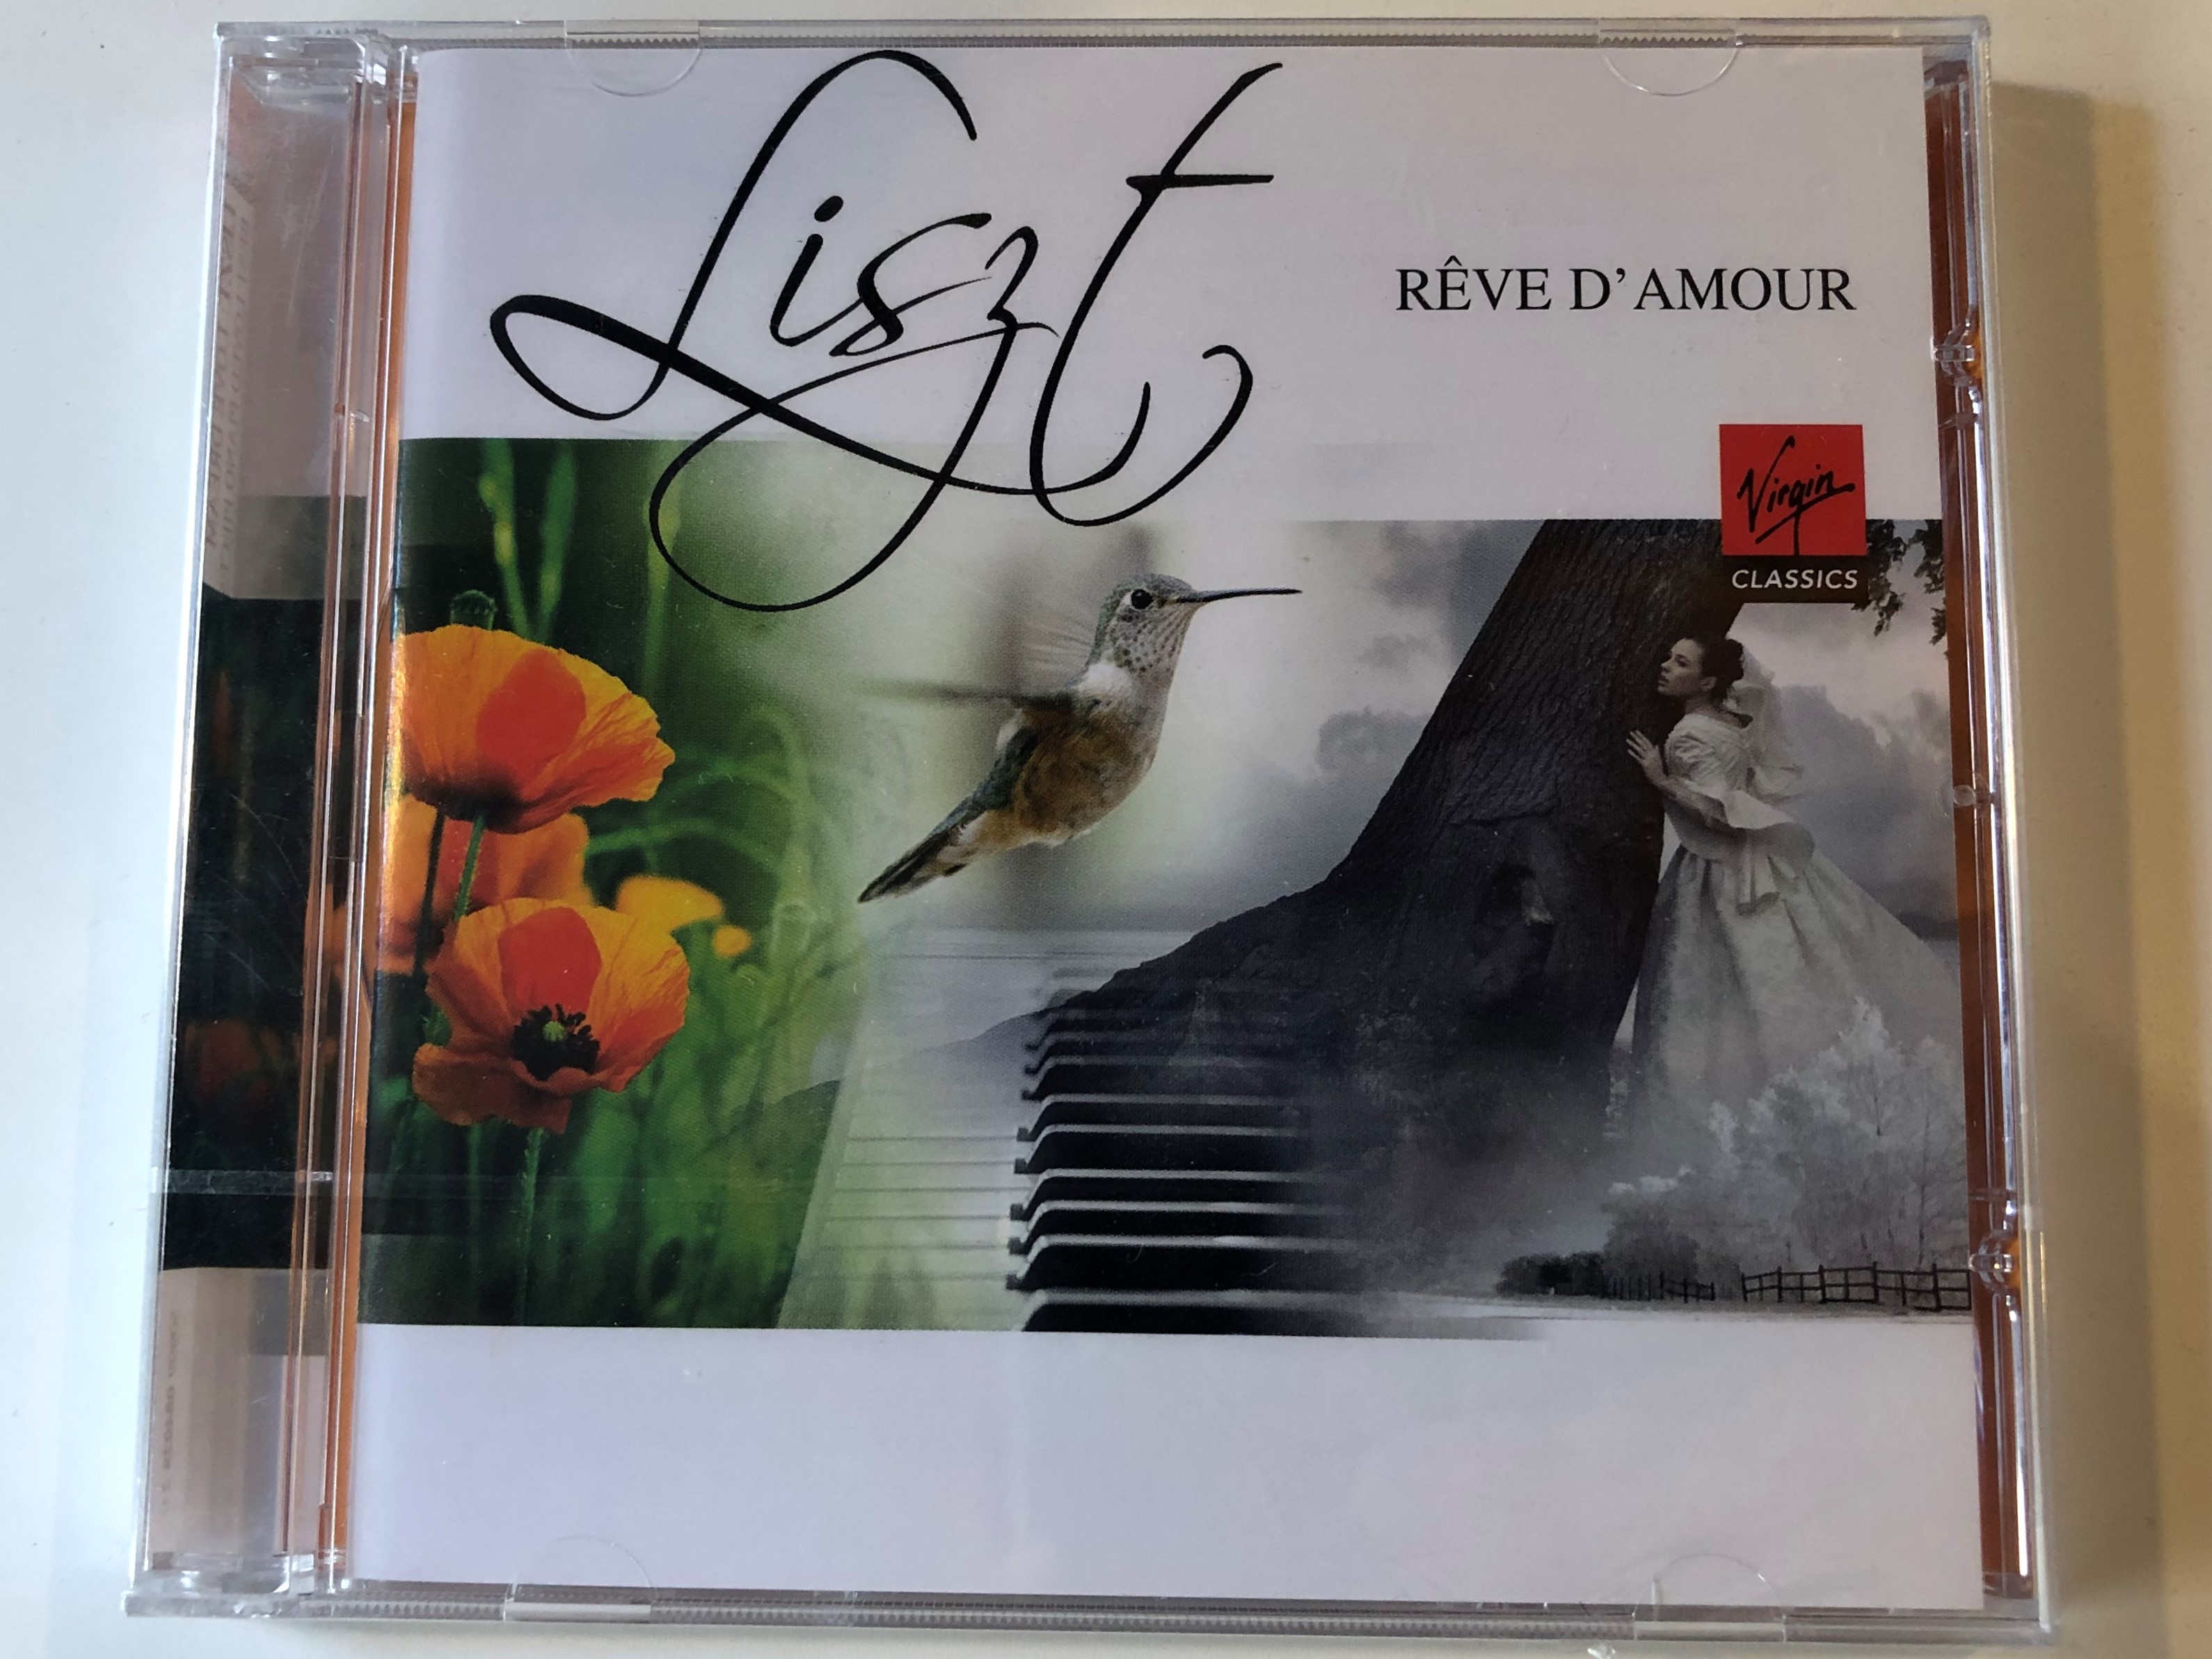 liszt-reve-d-amour-virgin-classics-audio-cd-2011-5099908402820-1-.jpg